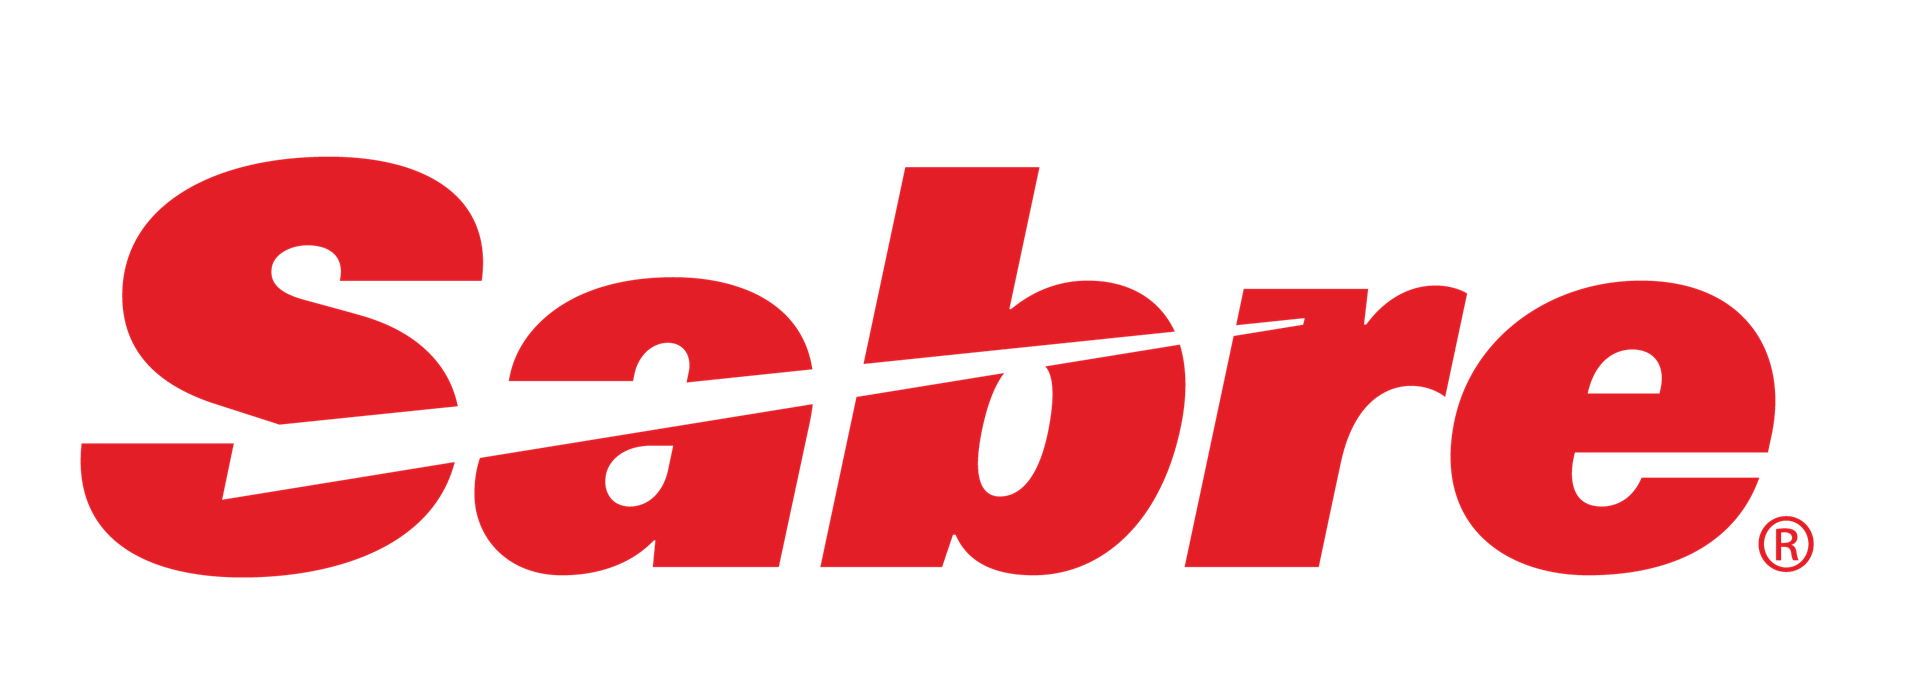 Aa.com Logo - AGIFORS - Revenue Management SG Meeting 2018